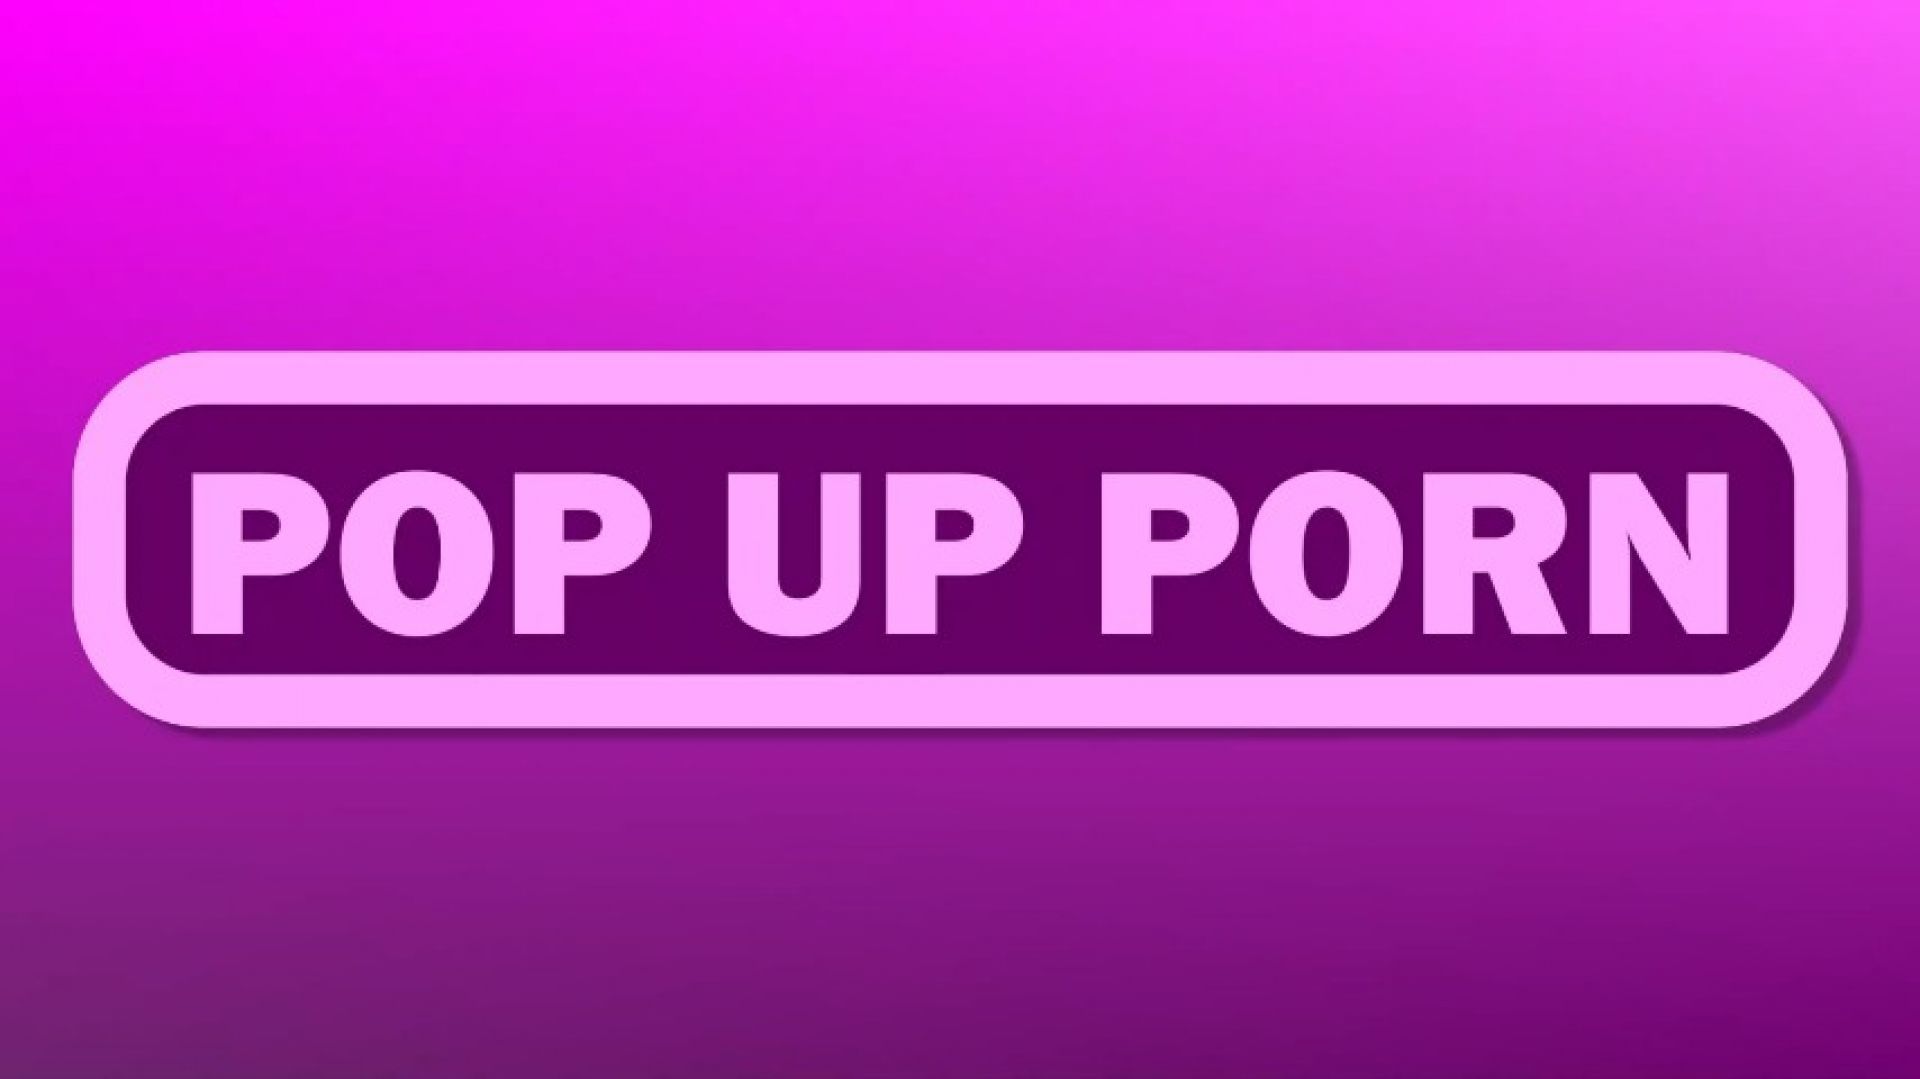 Pop Up Porn - The Company